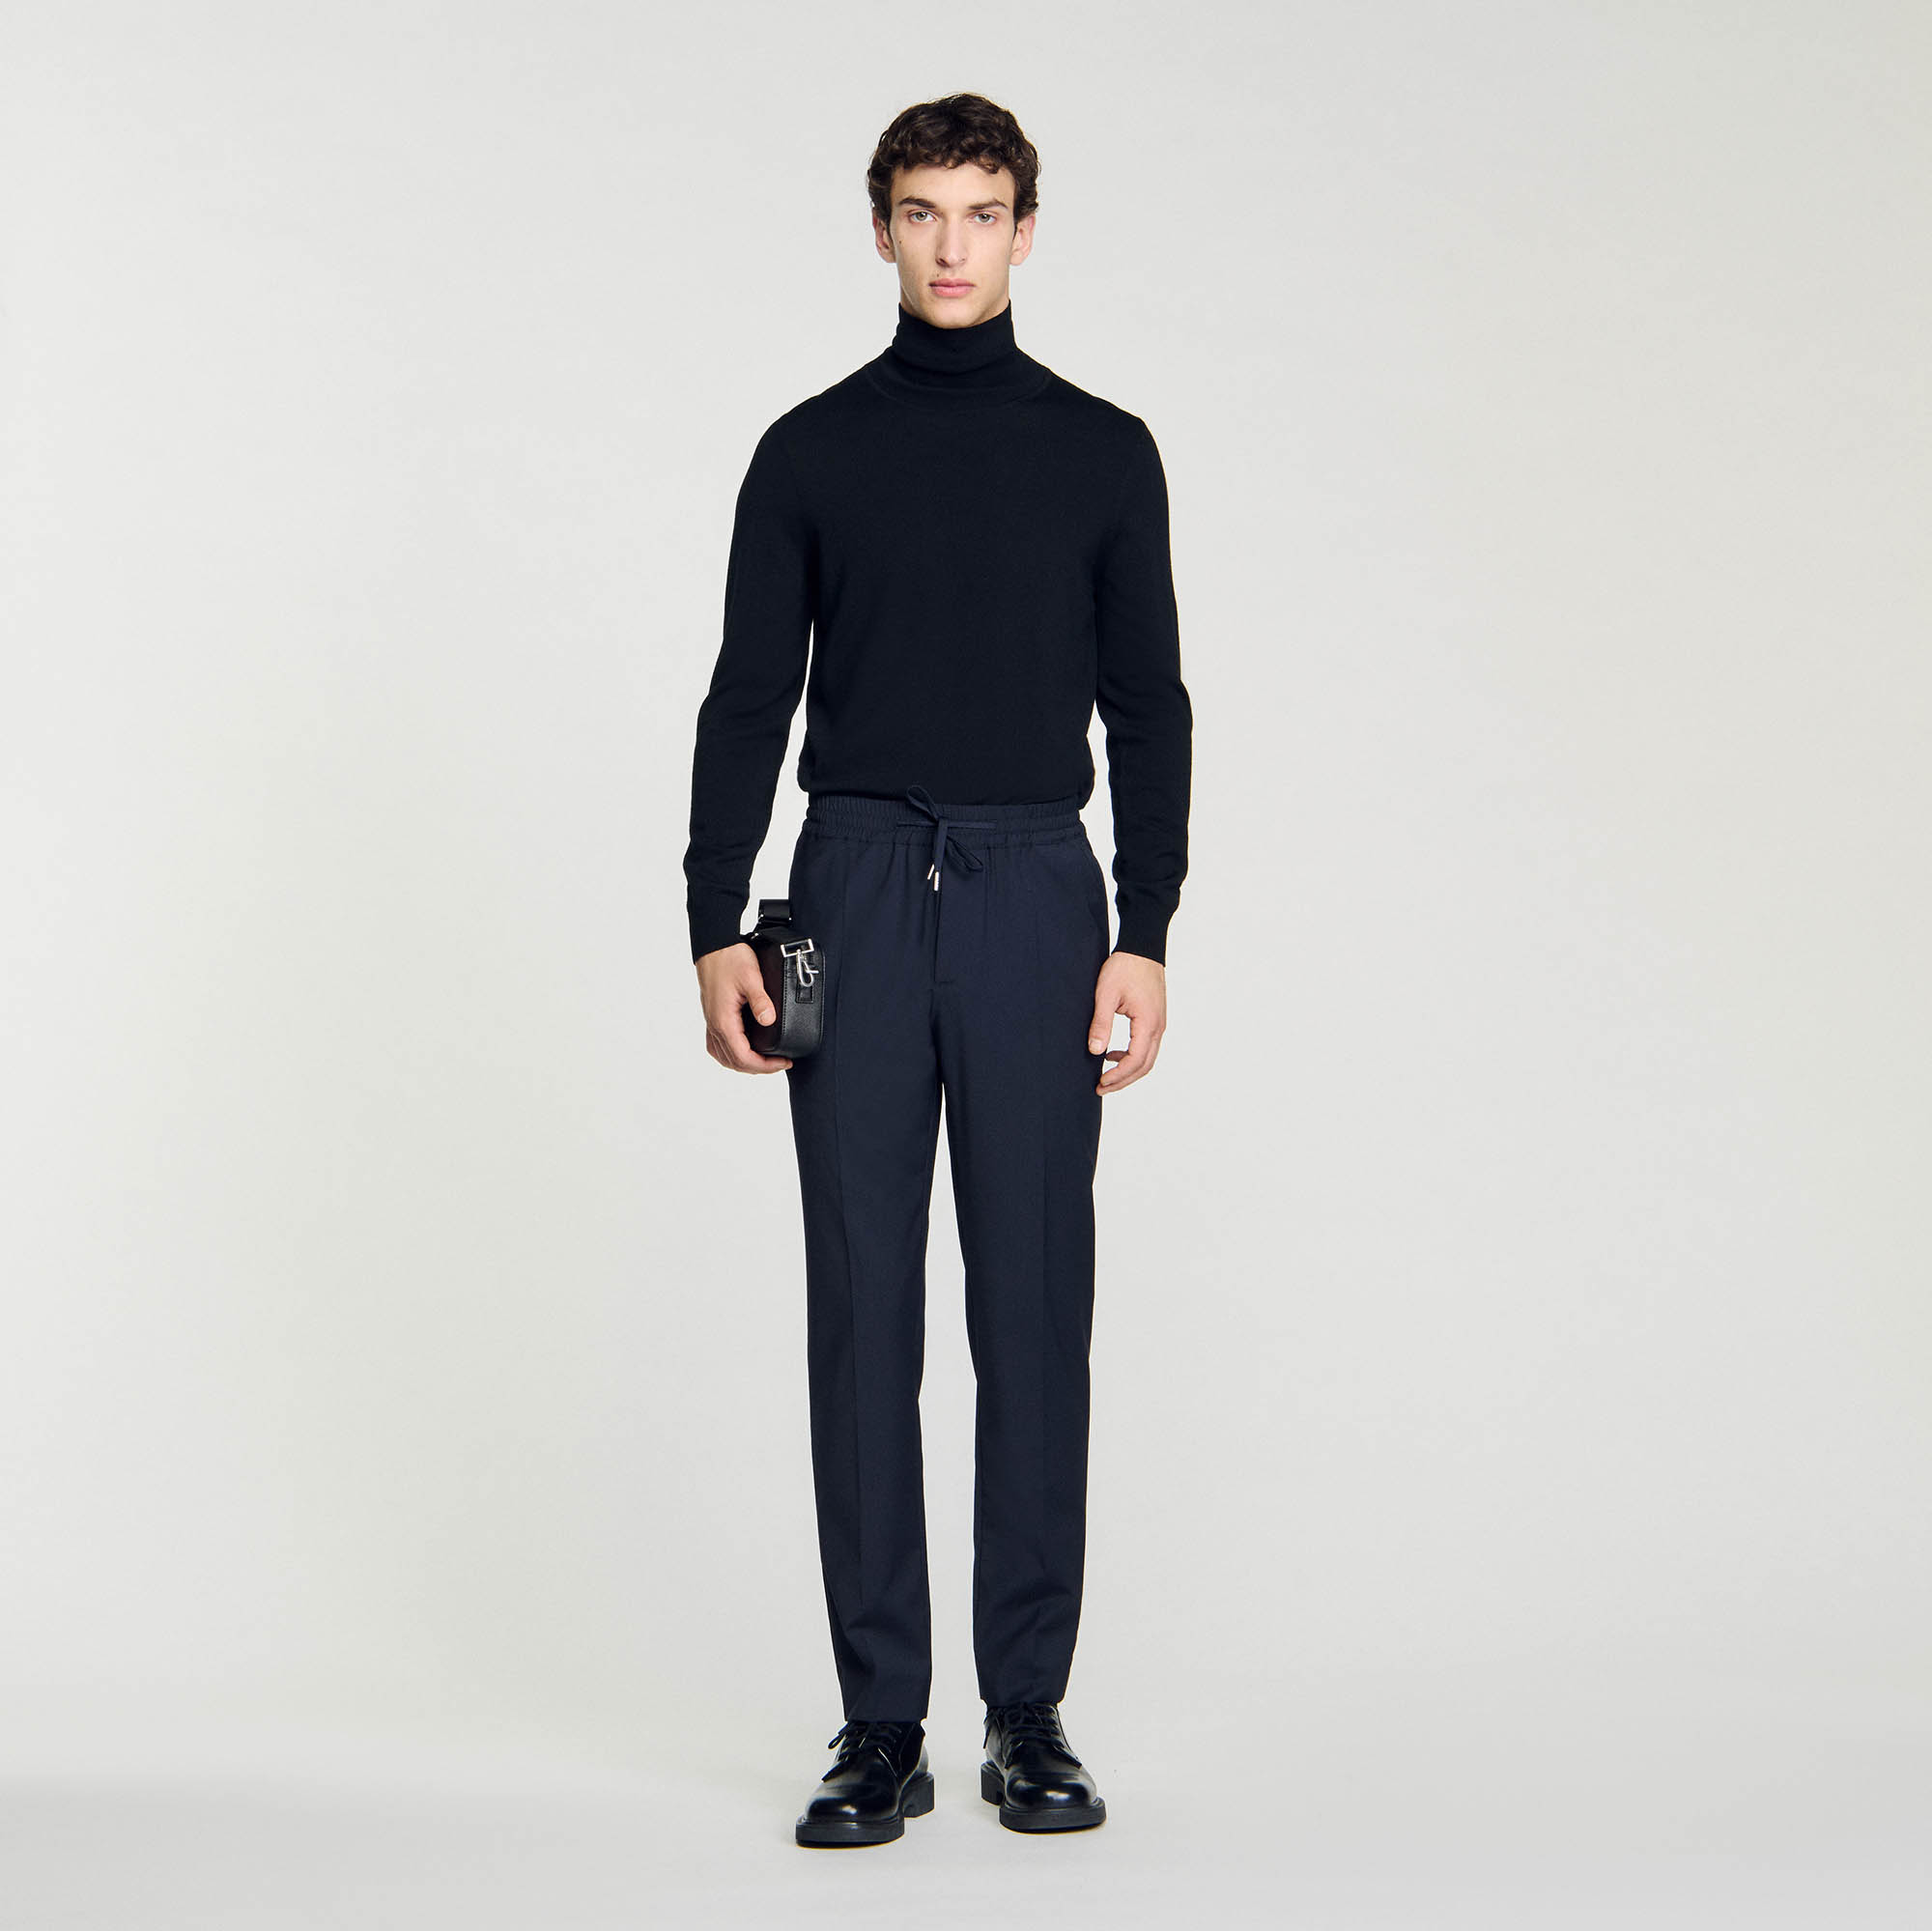 Sandro wool Straight-leg pants with an elasticated drawstring waist and pockets